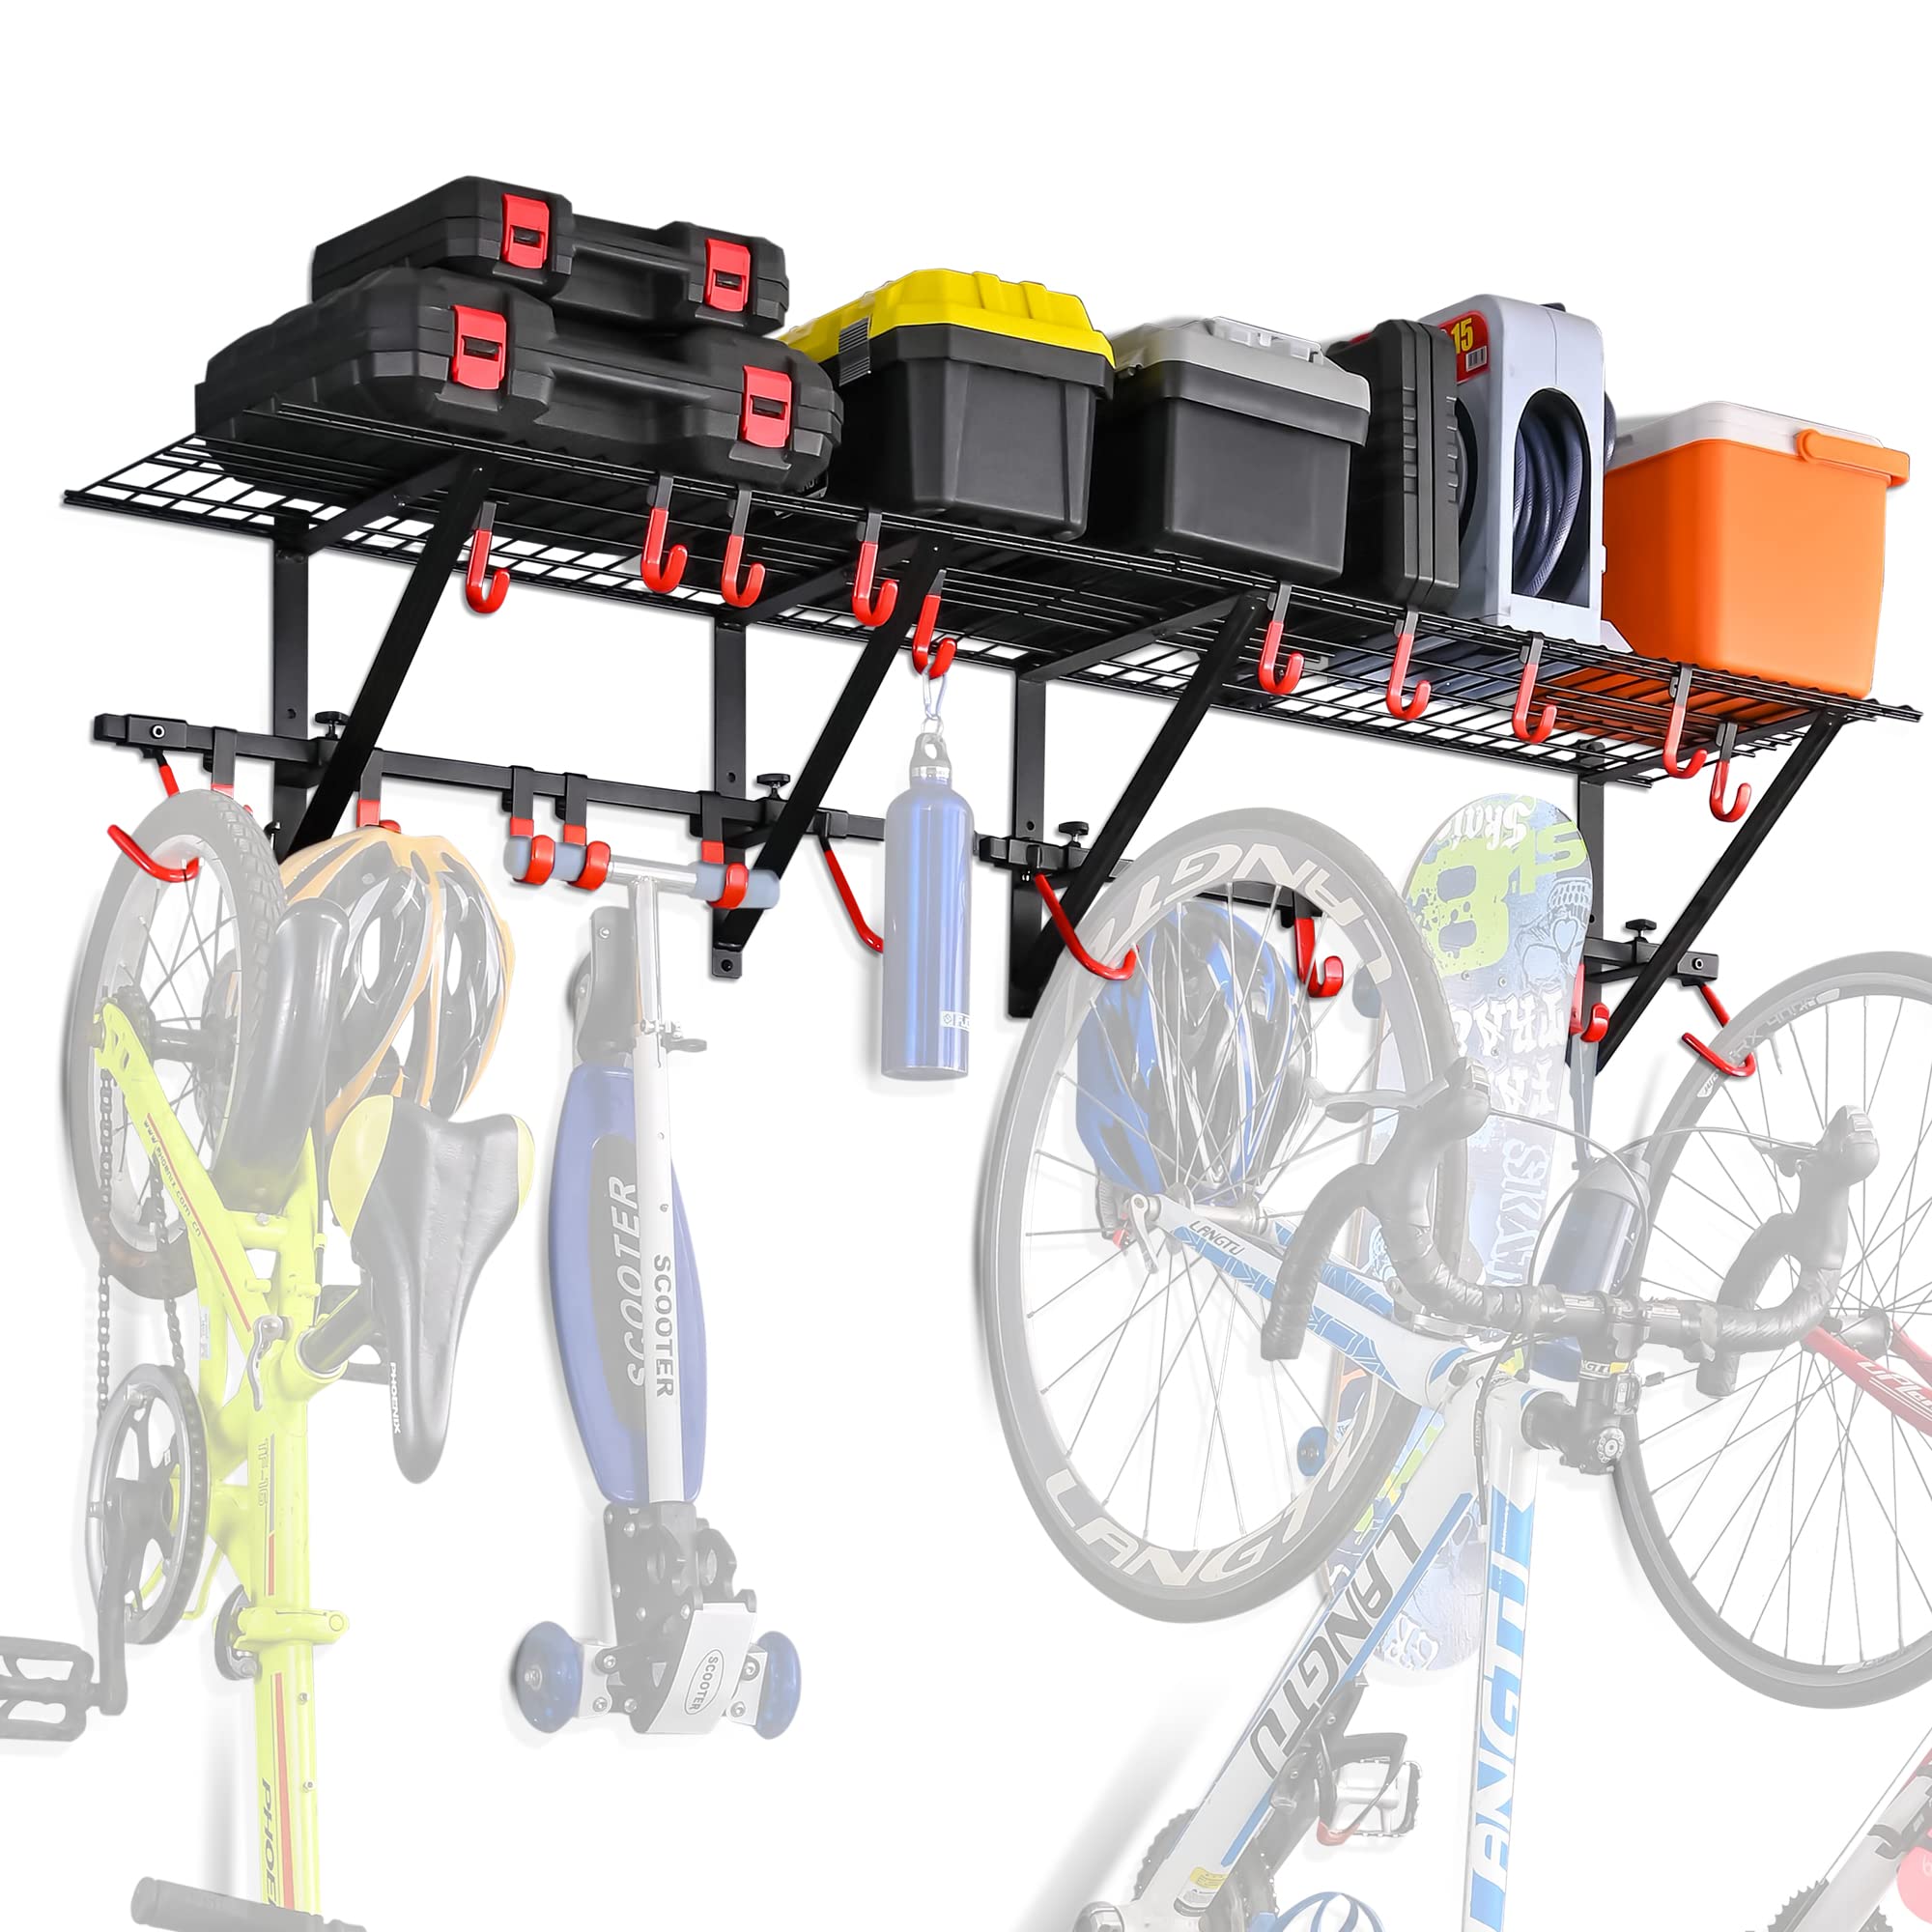 Mythinglogic Garage Wall Shelving 1 Pack Includes Bike Hooks, Wall She